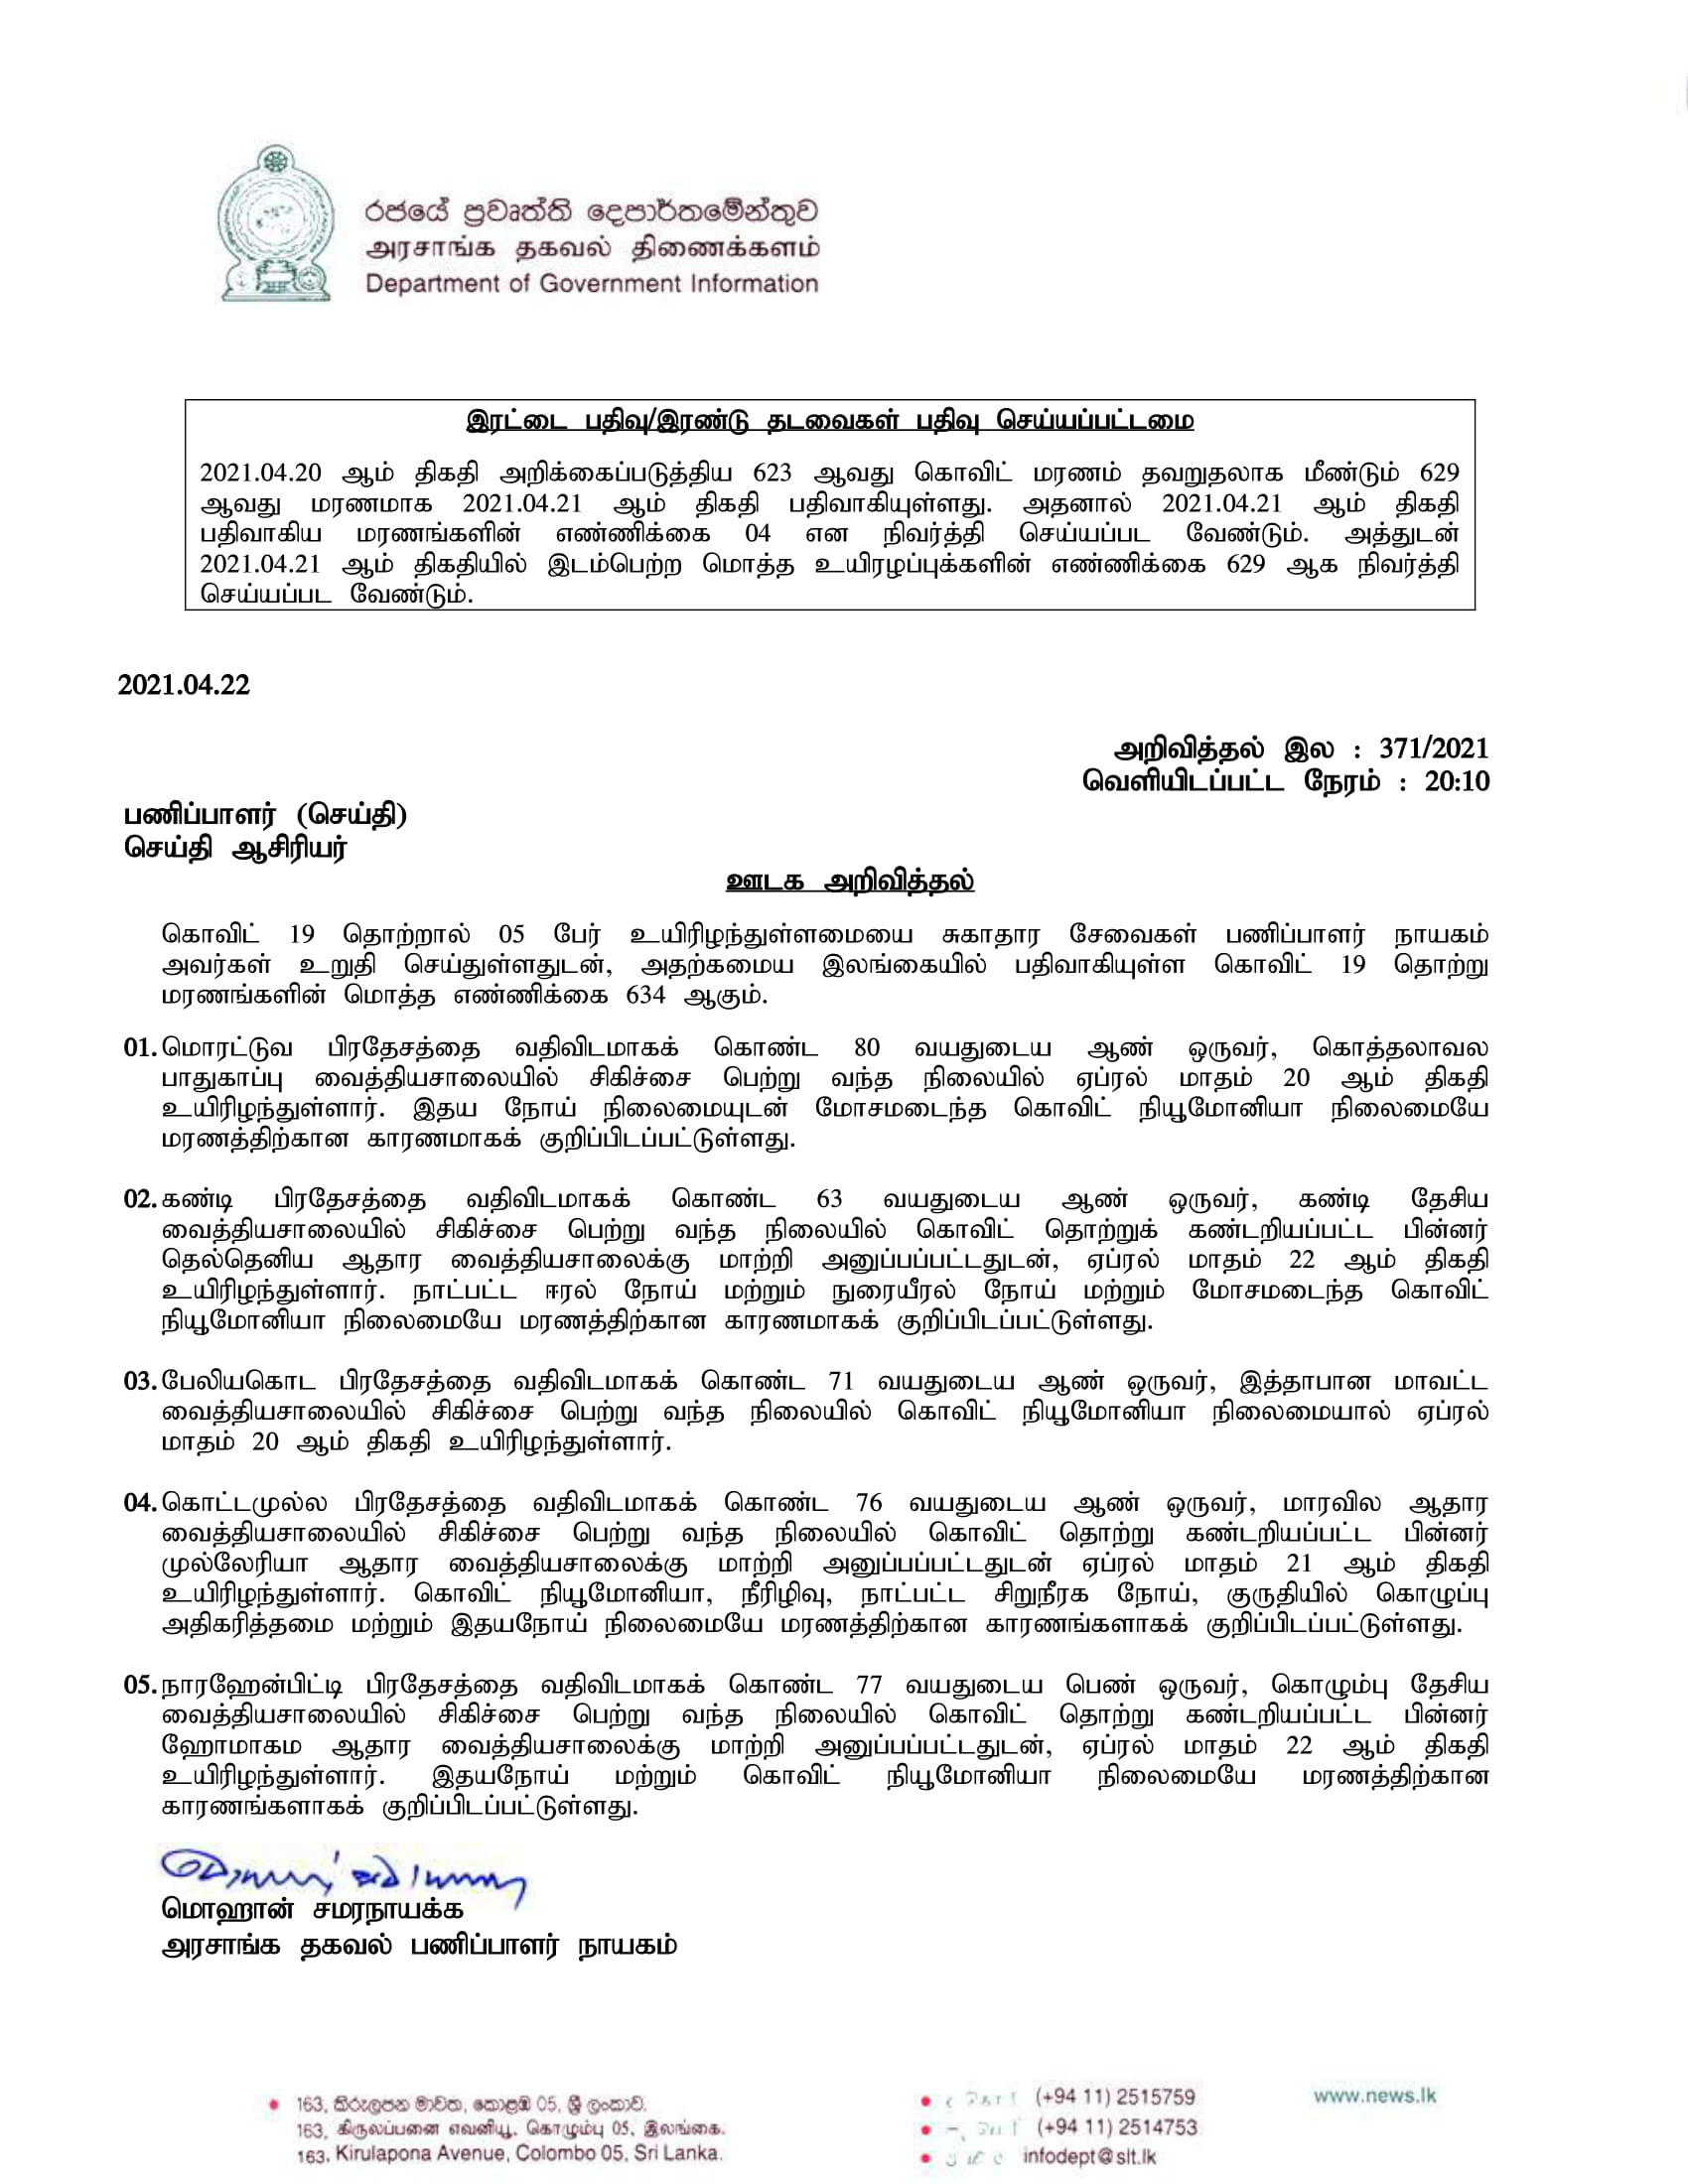 Release No 371 Tamil 1